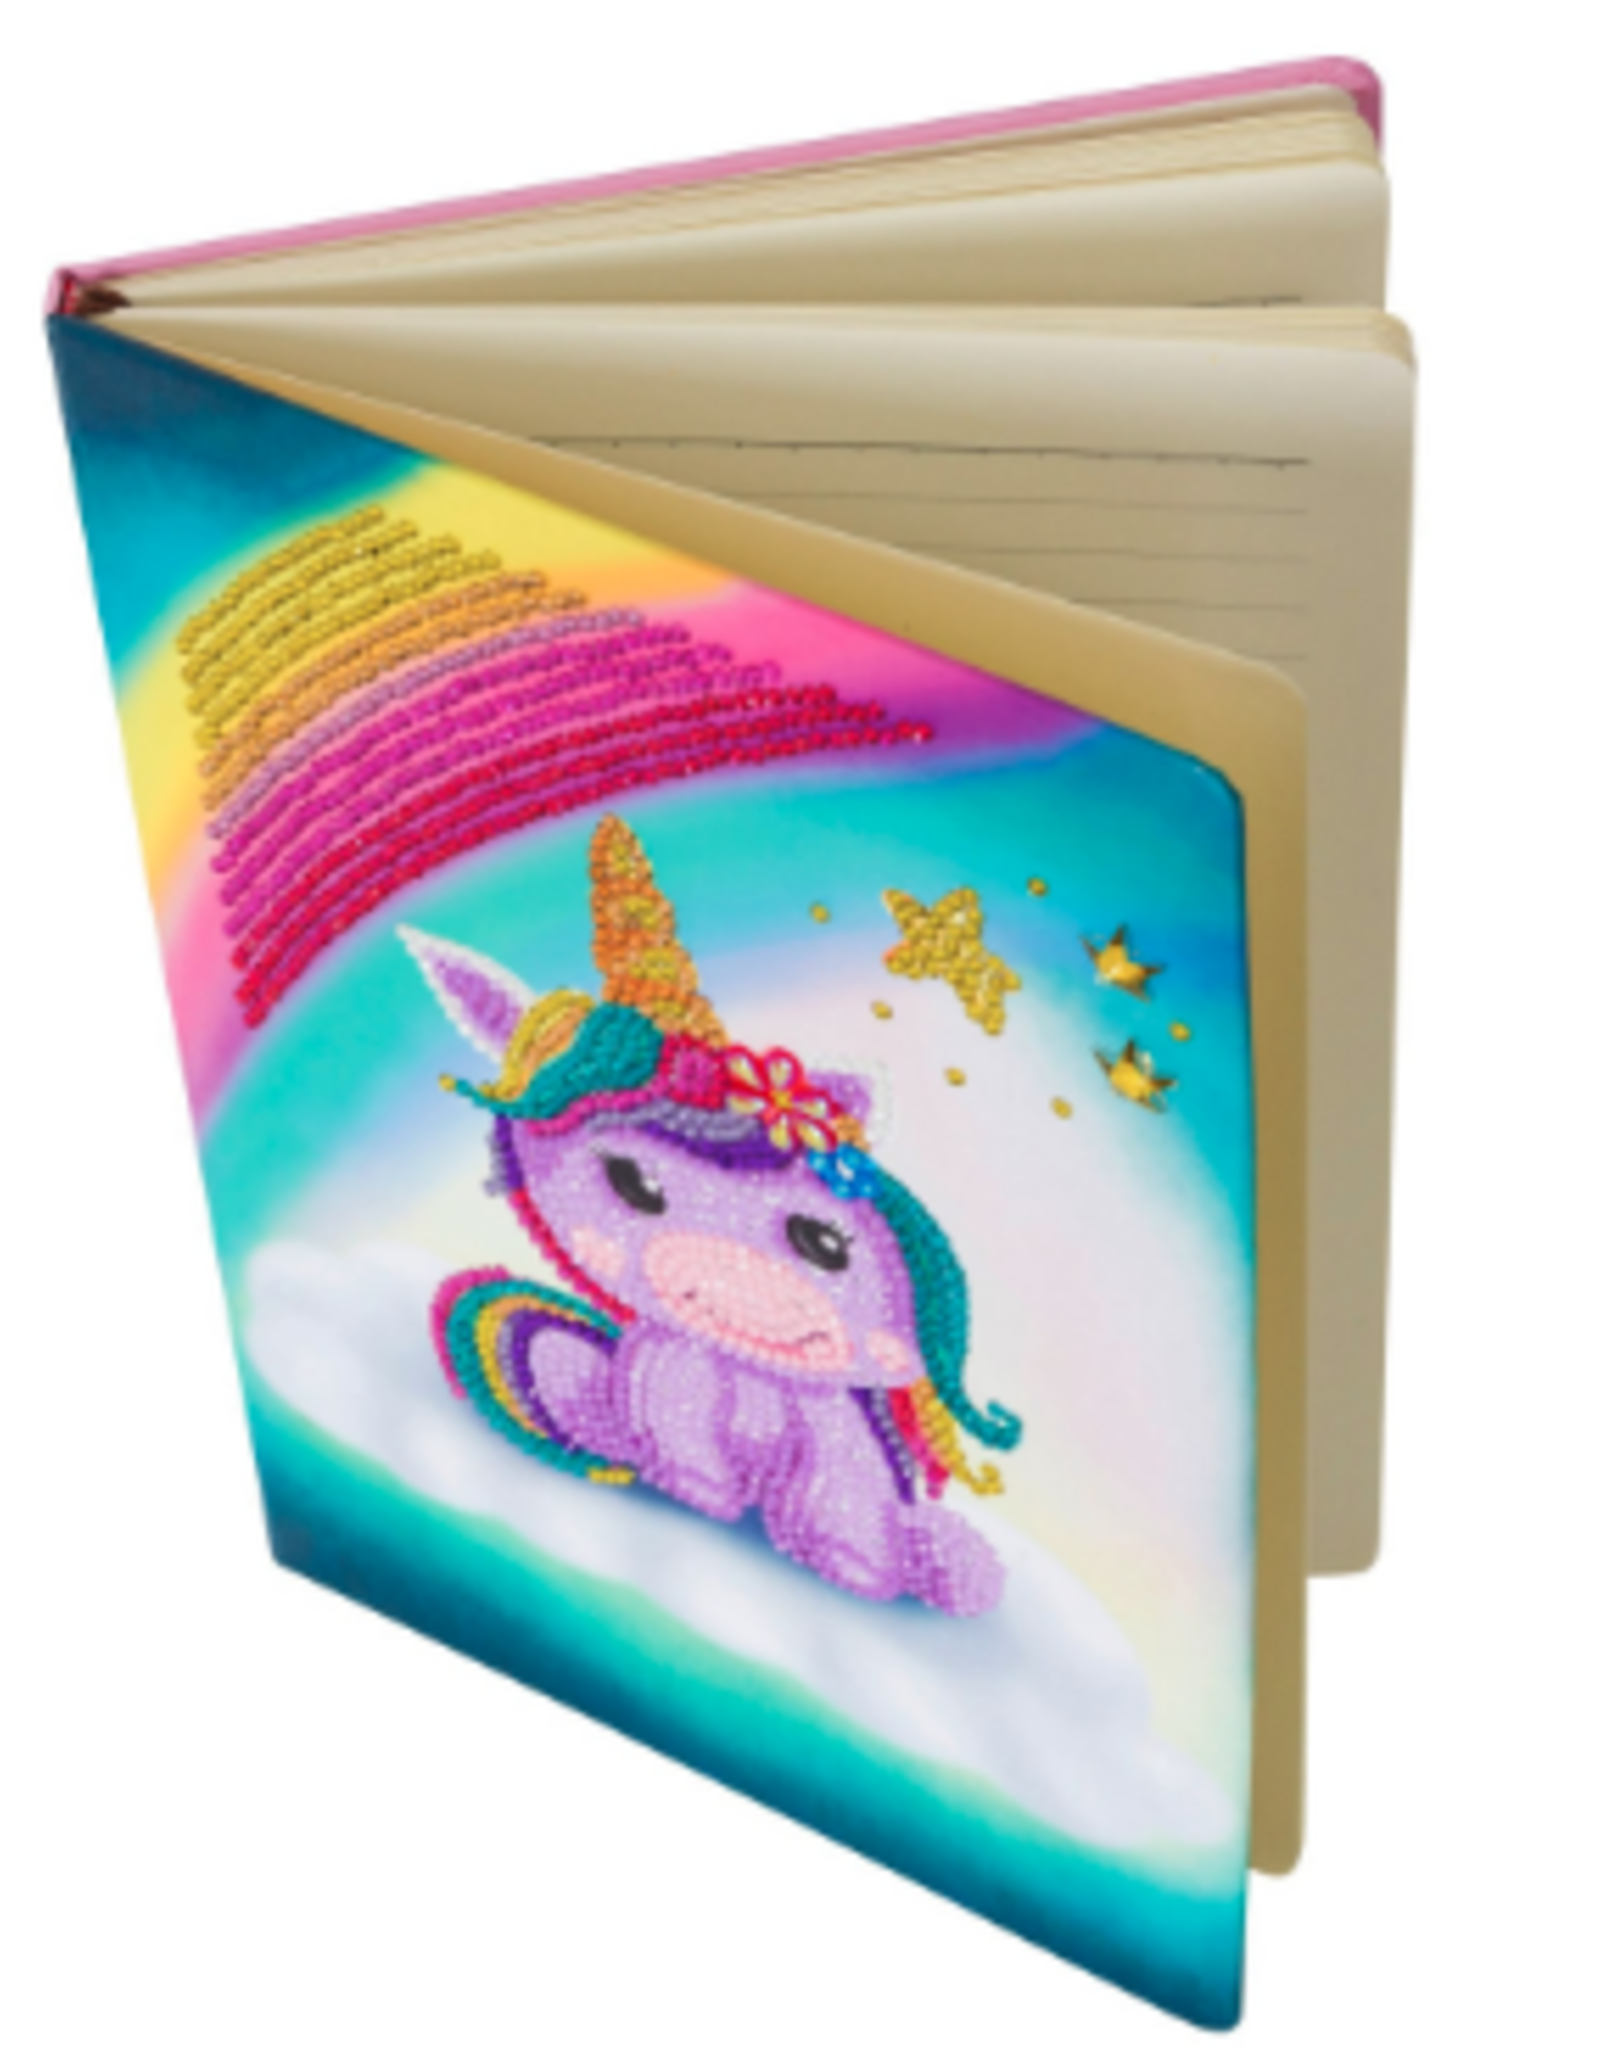 Outset media Crystal Art Notebook - Unicorn Smiles